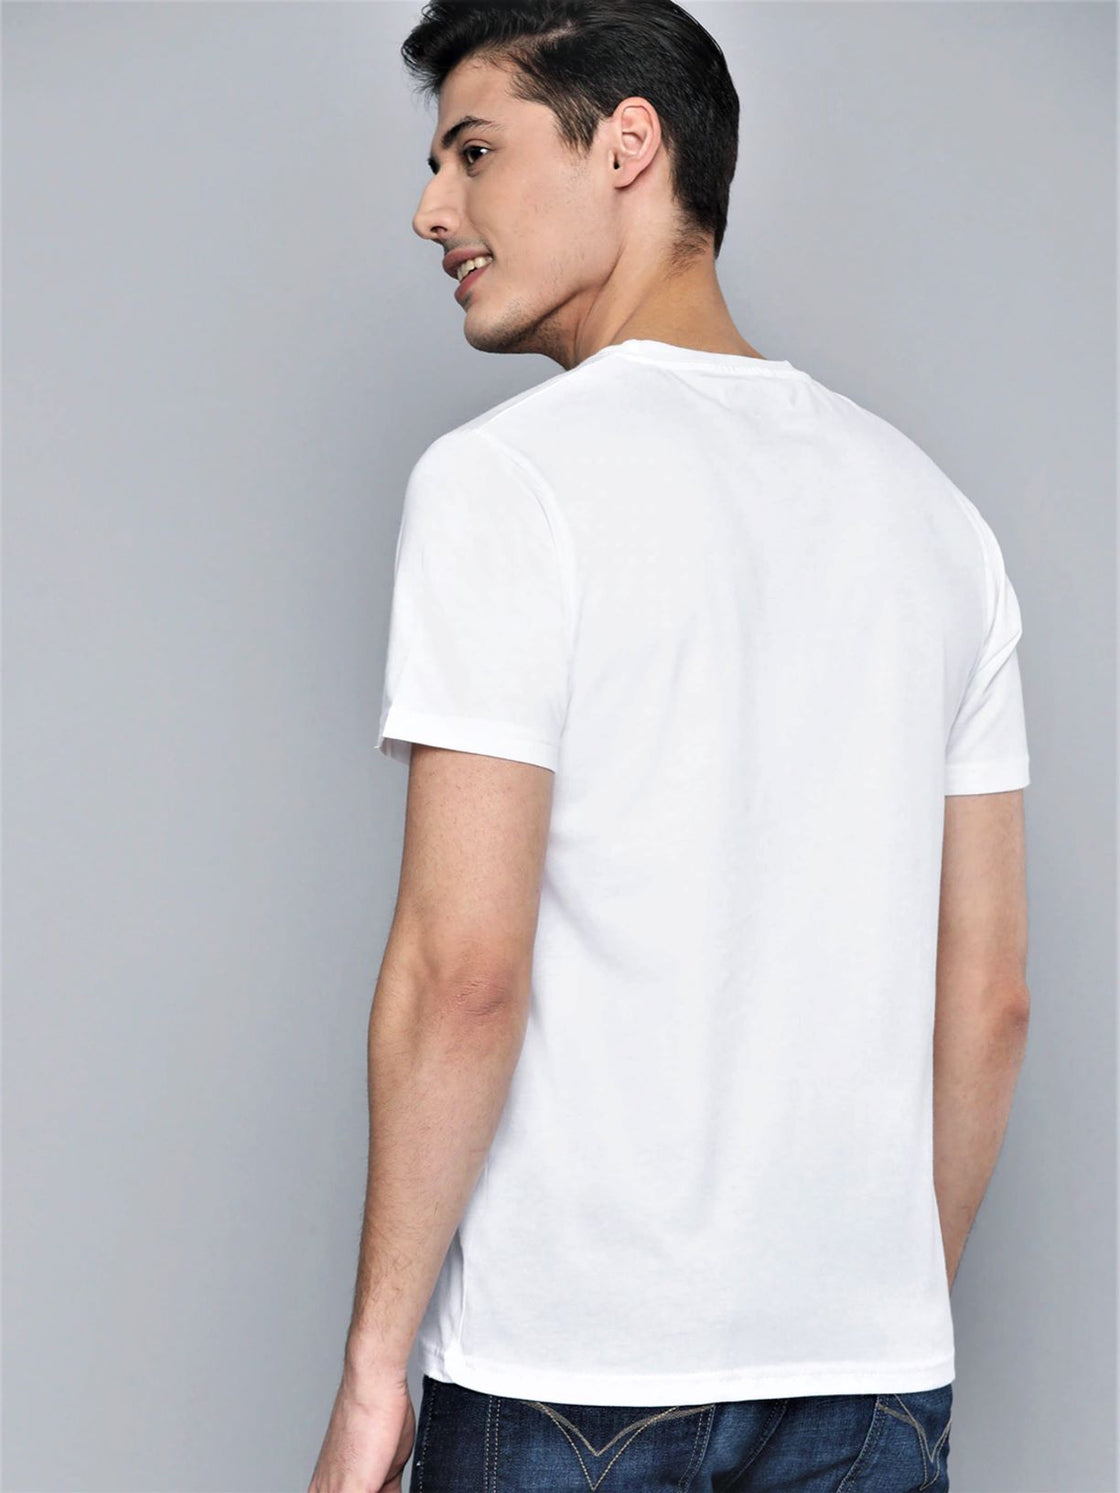 Men's  Casual Wear White T-Shirt